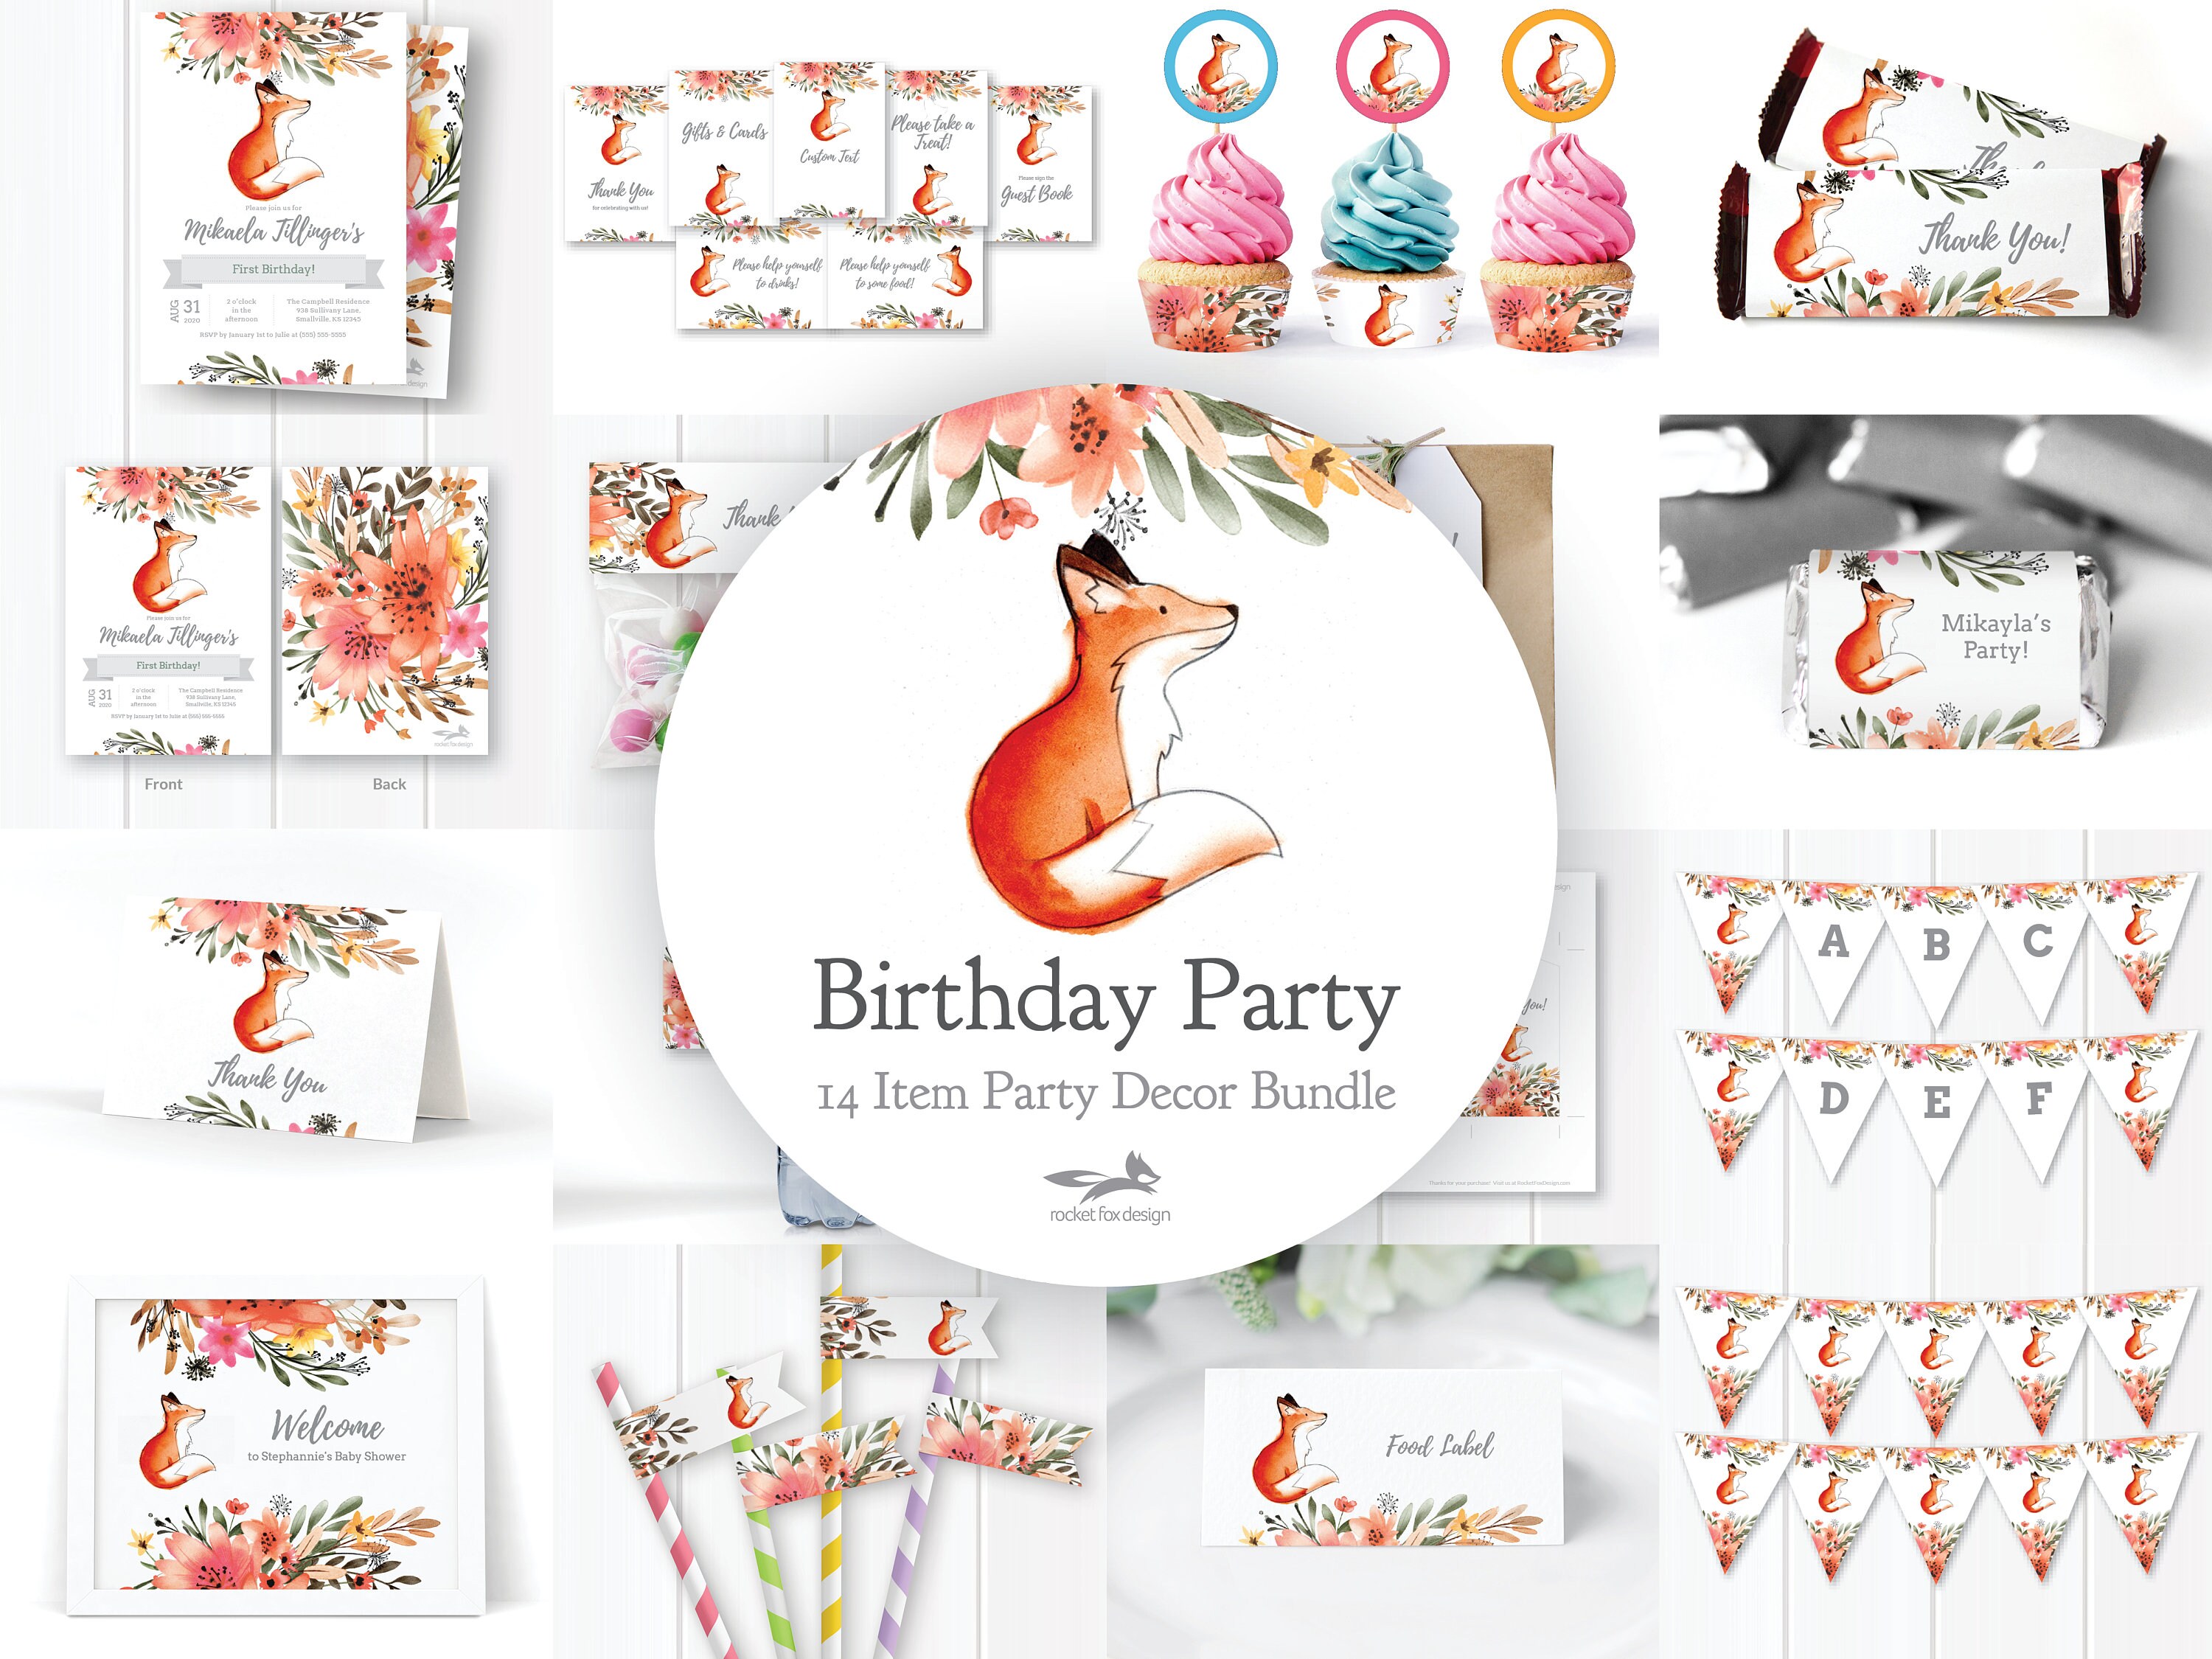 DIWULI Fox Balloon Birthday Decoration 1 Year Set - Fox Birthday  Decorations, Fox Party Decorations, Fox Birthday Party Supplies, Baby  Shower Fox